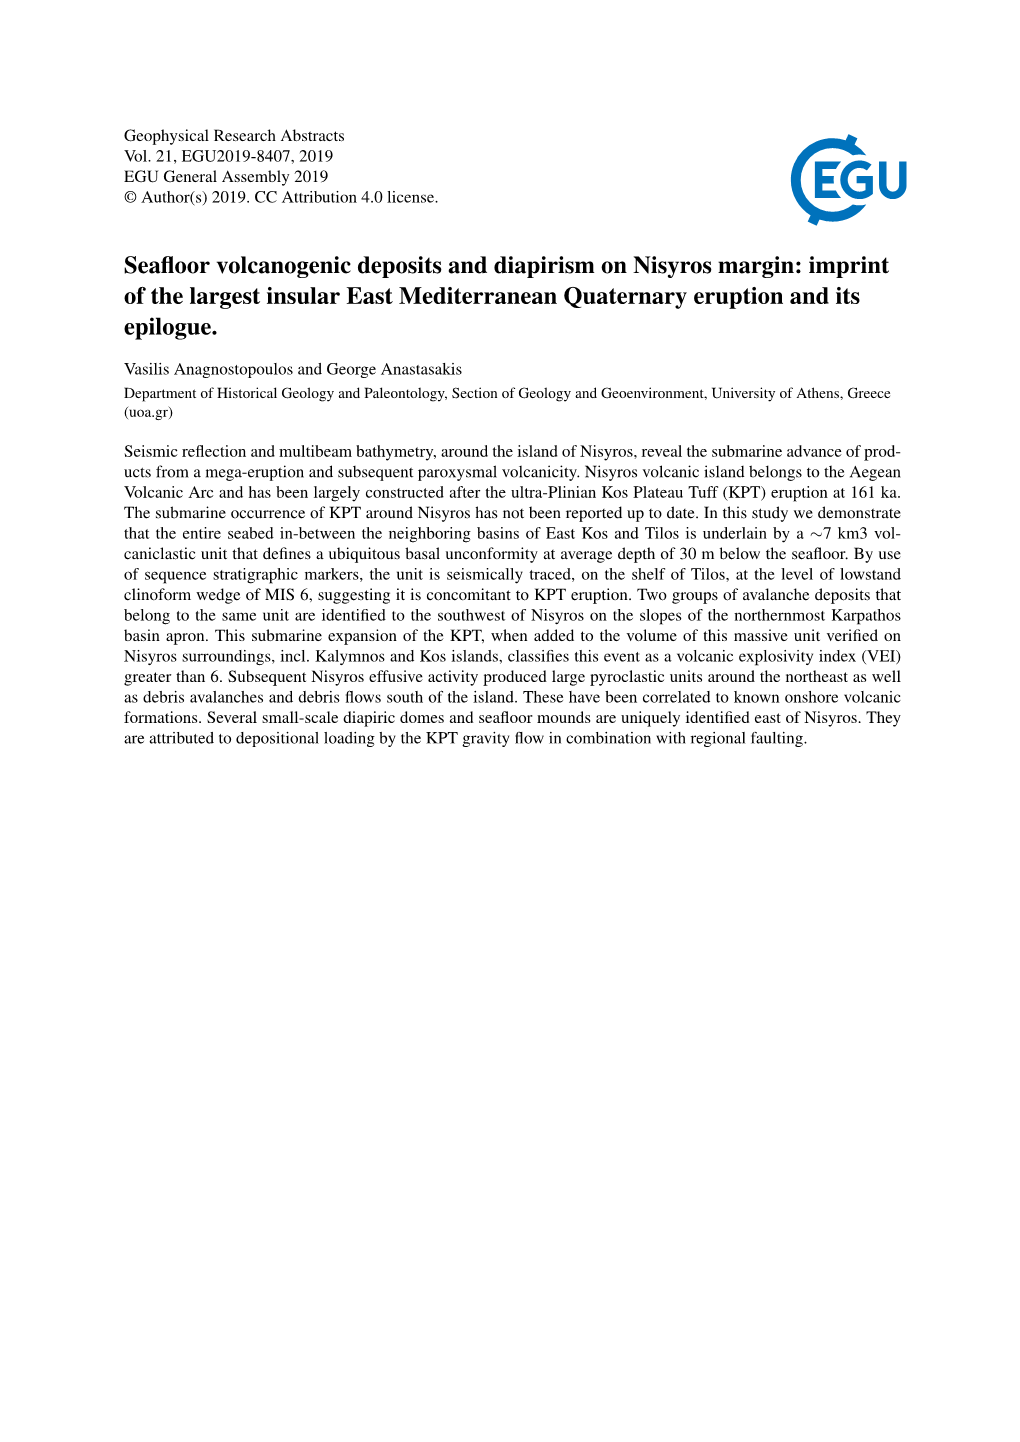 Seafloor Volcanogenic Deposits and Diapirism on Nisyros Margin: Imprint